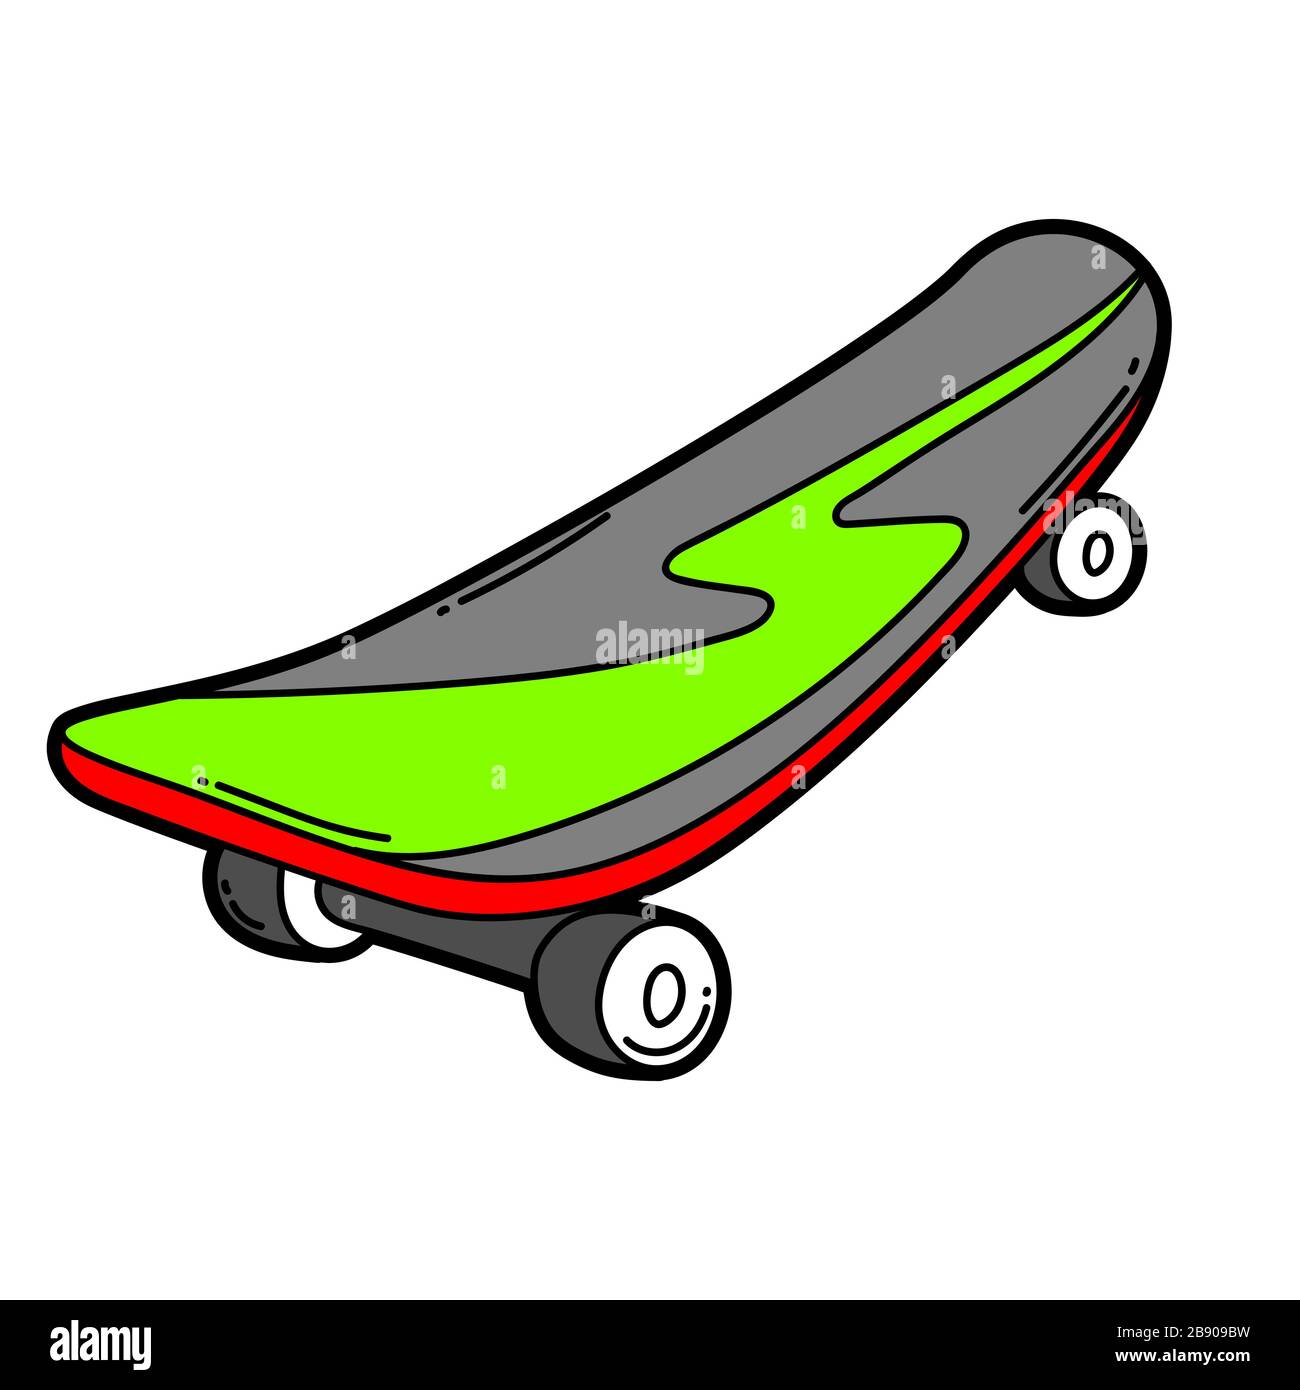 Cartoon skateboard Stock-Vektorgrafiken kaufen - Alamy